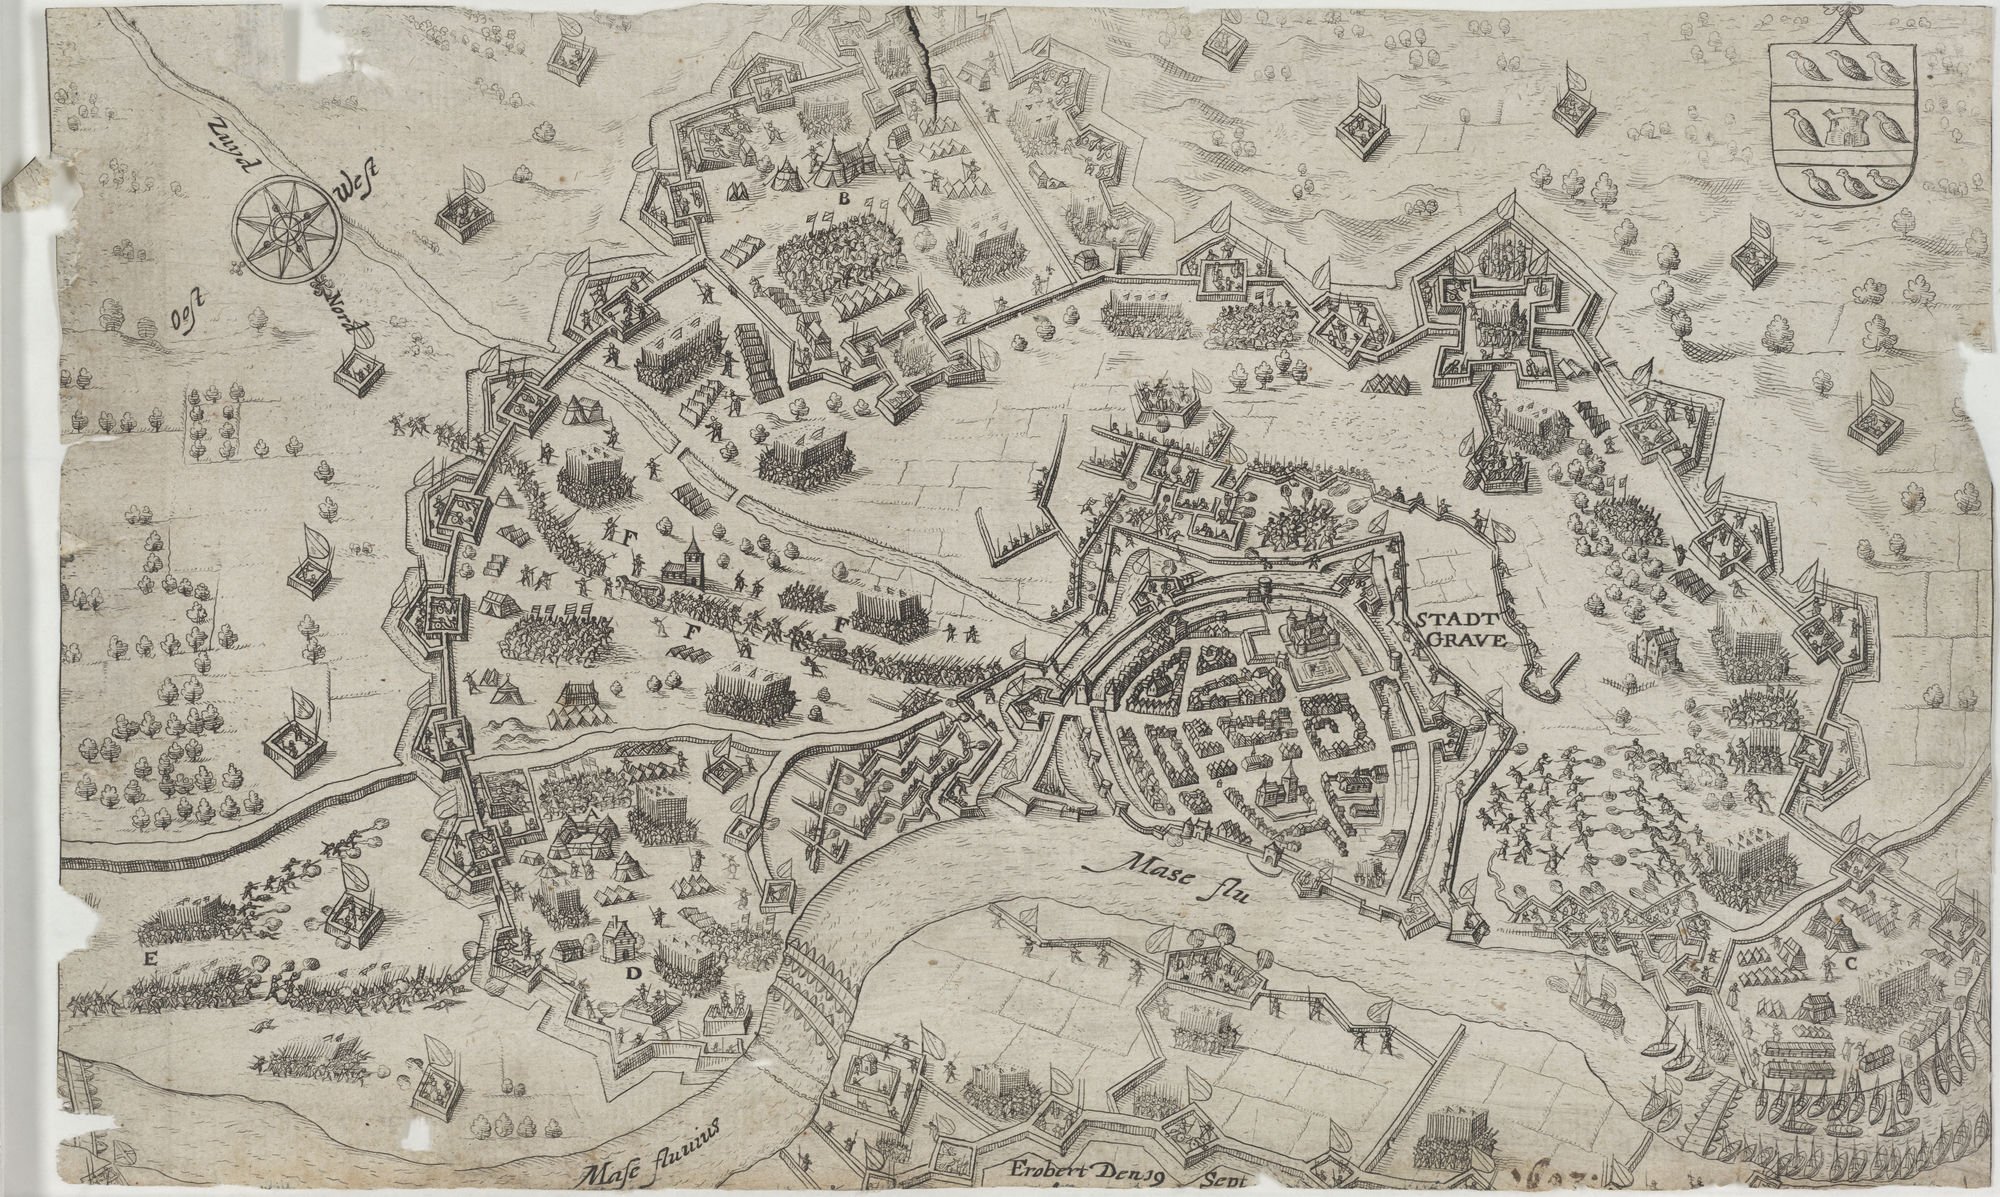 STADT GRAVE/ Erobert Den 19 Sept. Anno 1602. (Kulturstiftung Sachsen-Anhalt Public Domain Mark)